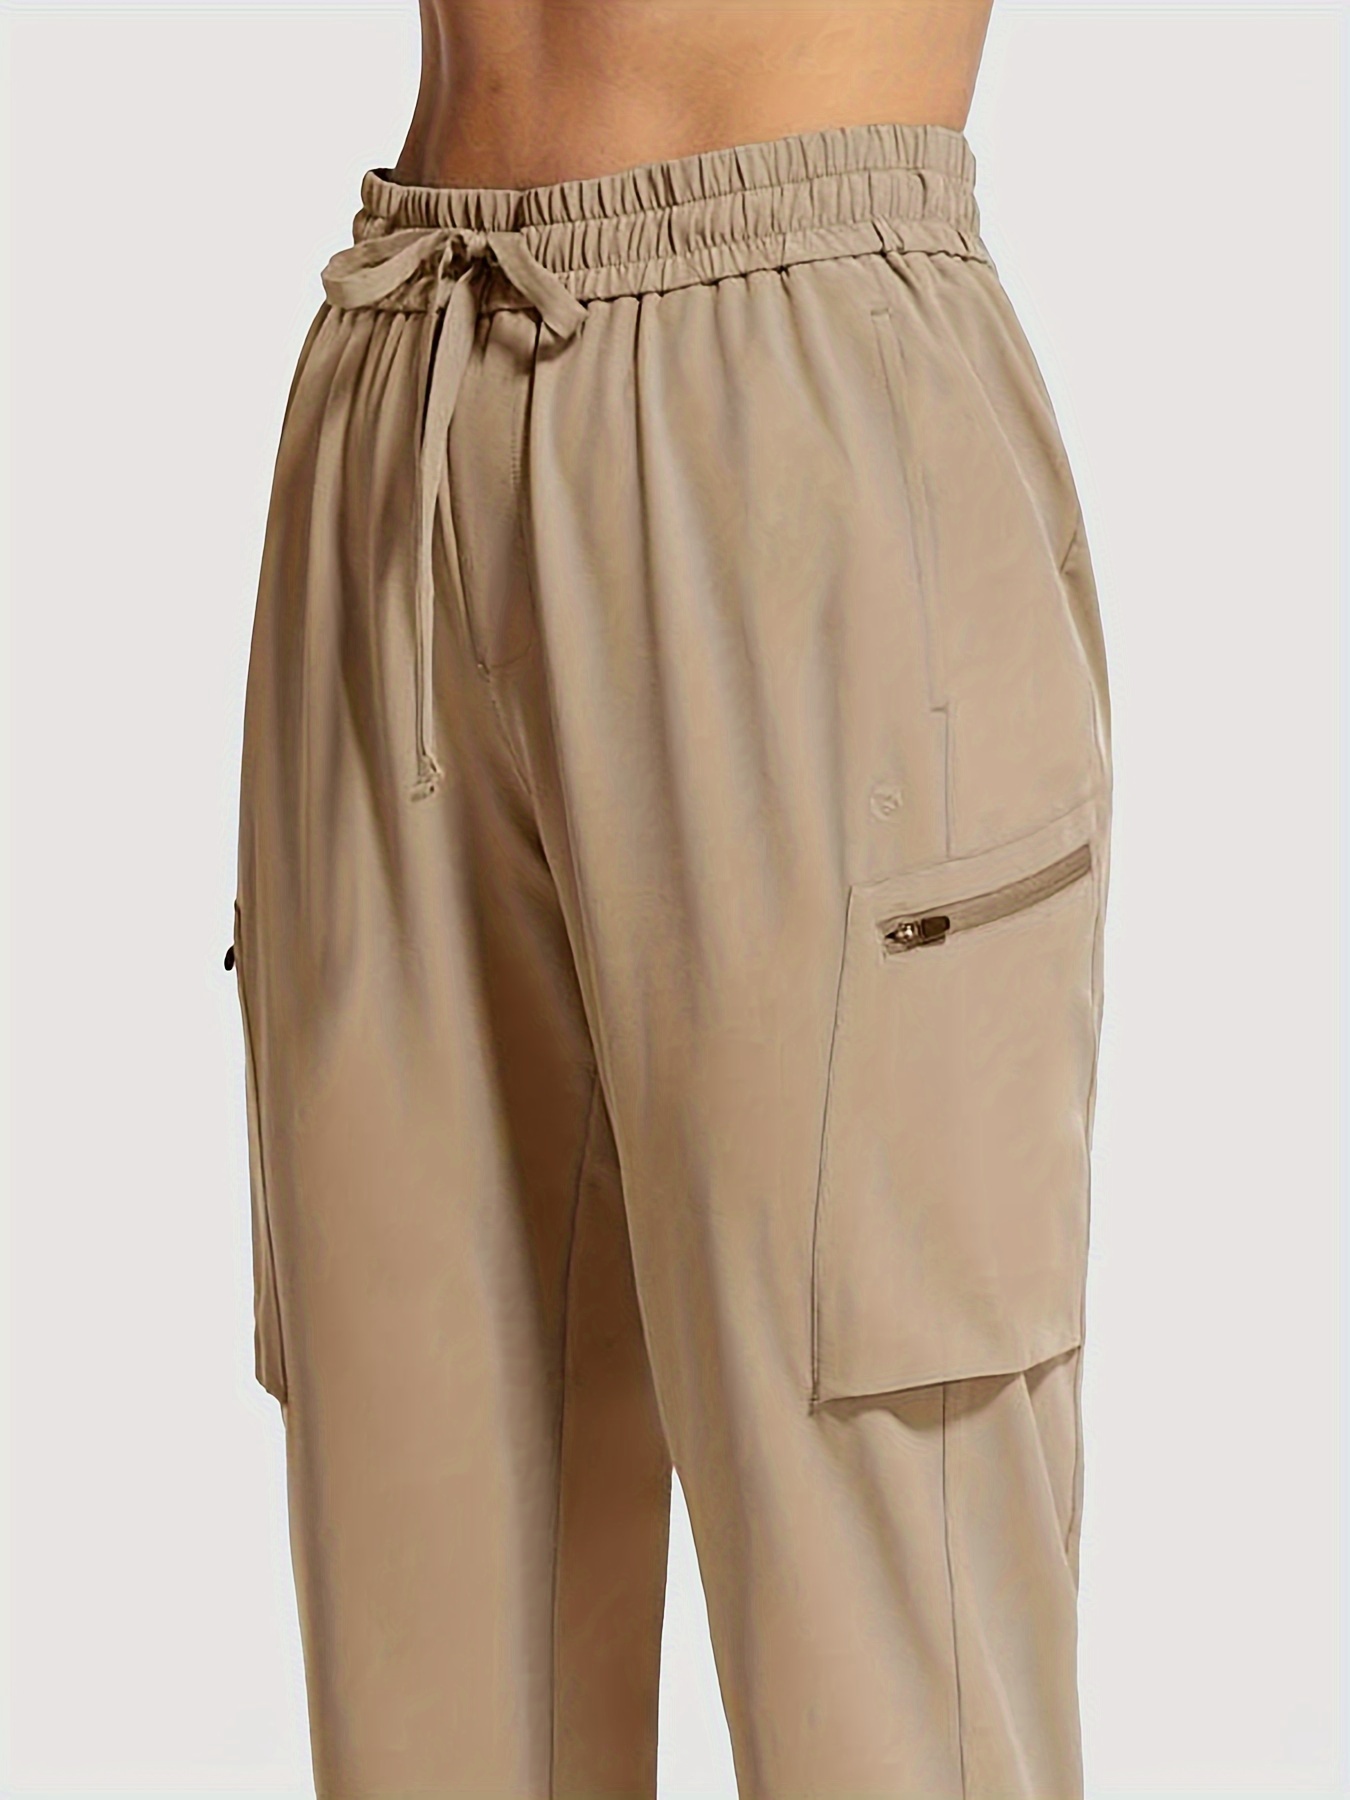  MoFiz Women's Hiking Cargo Pants Quick Dry Lightweight